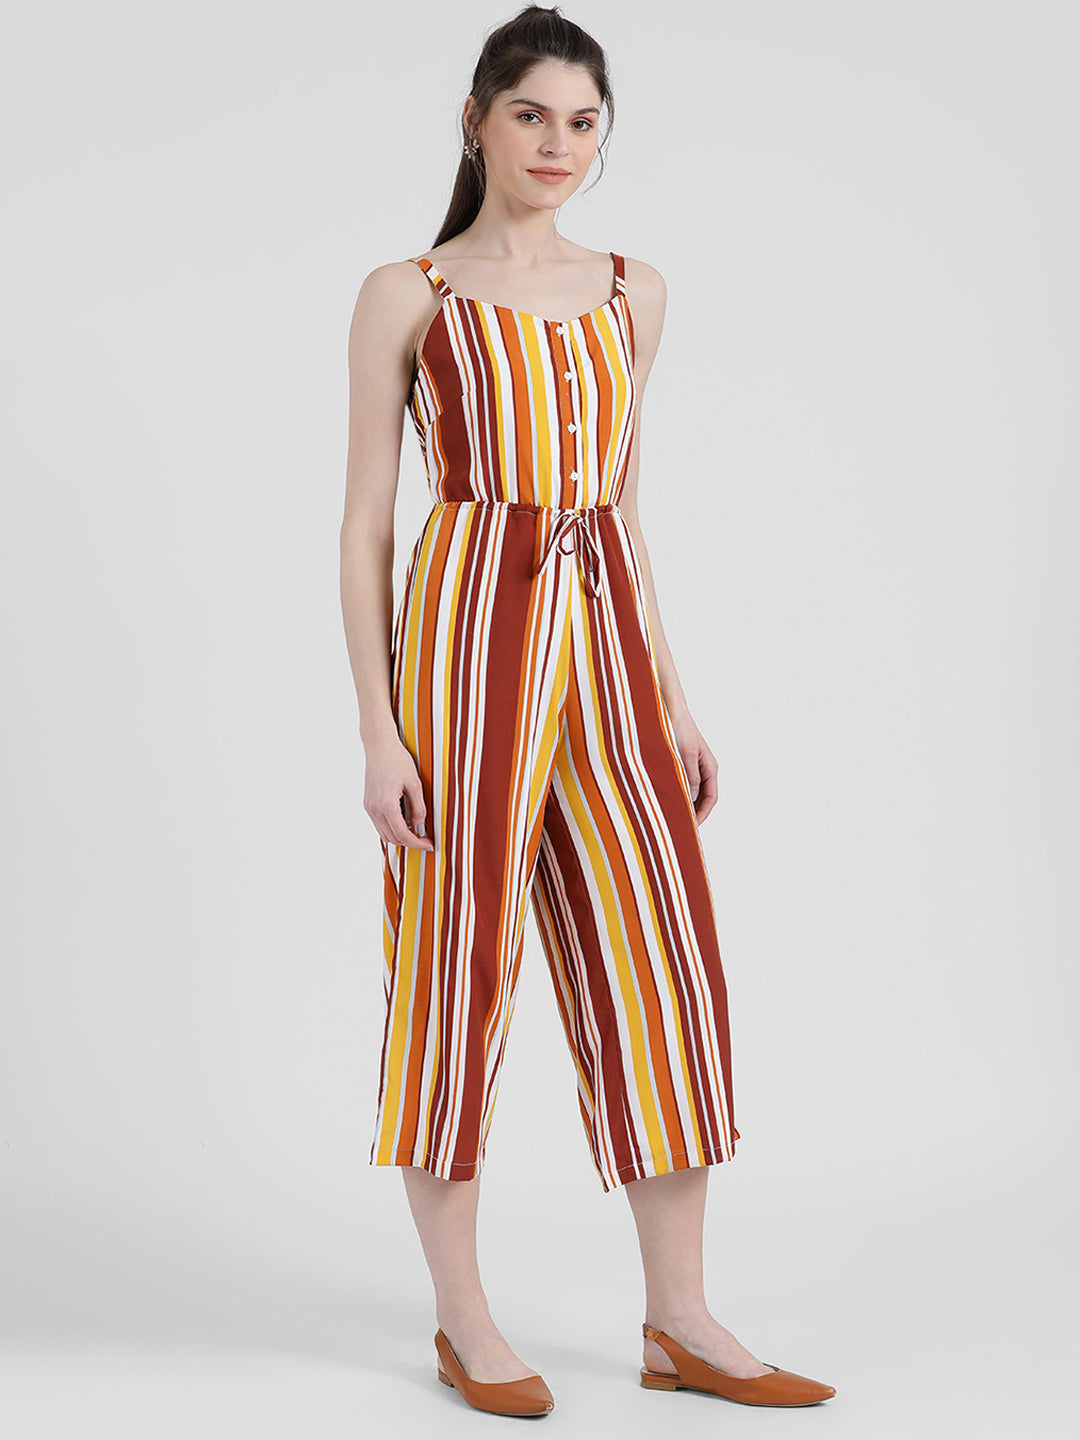 Zink London Women's Multi-Colored Striped Basic Jumpsuit